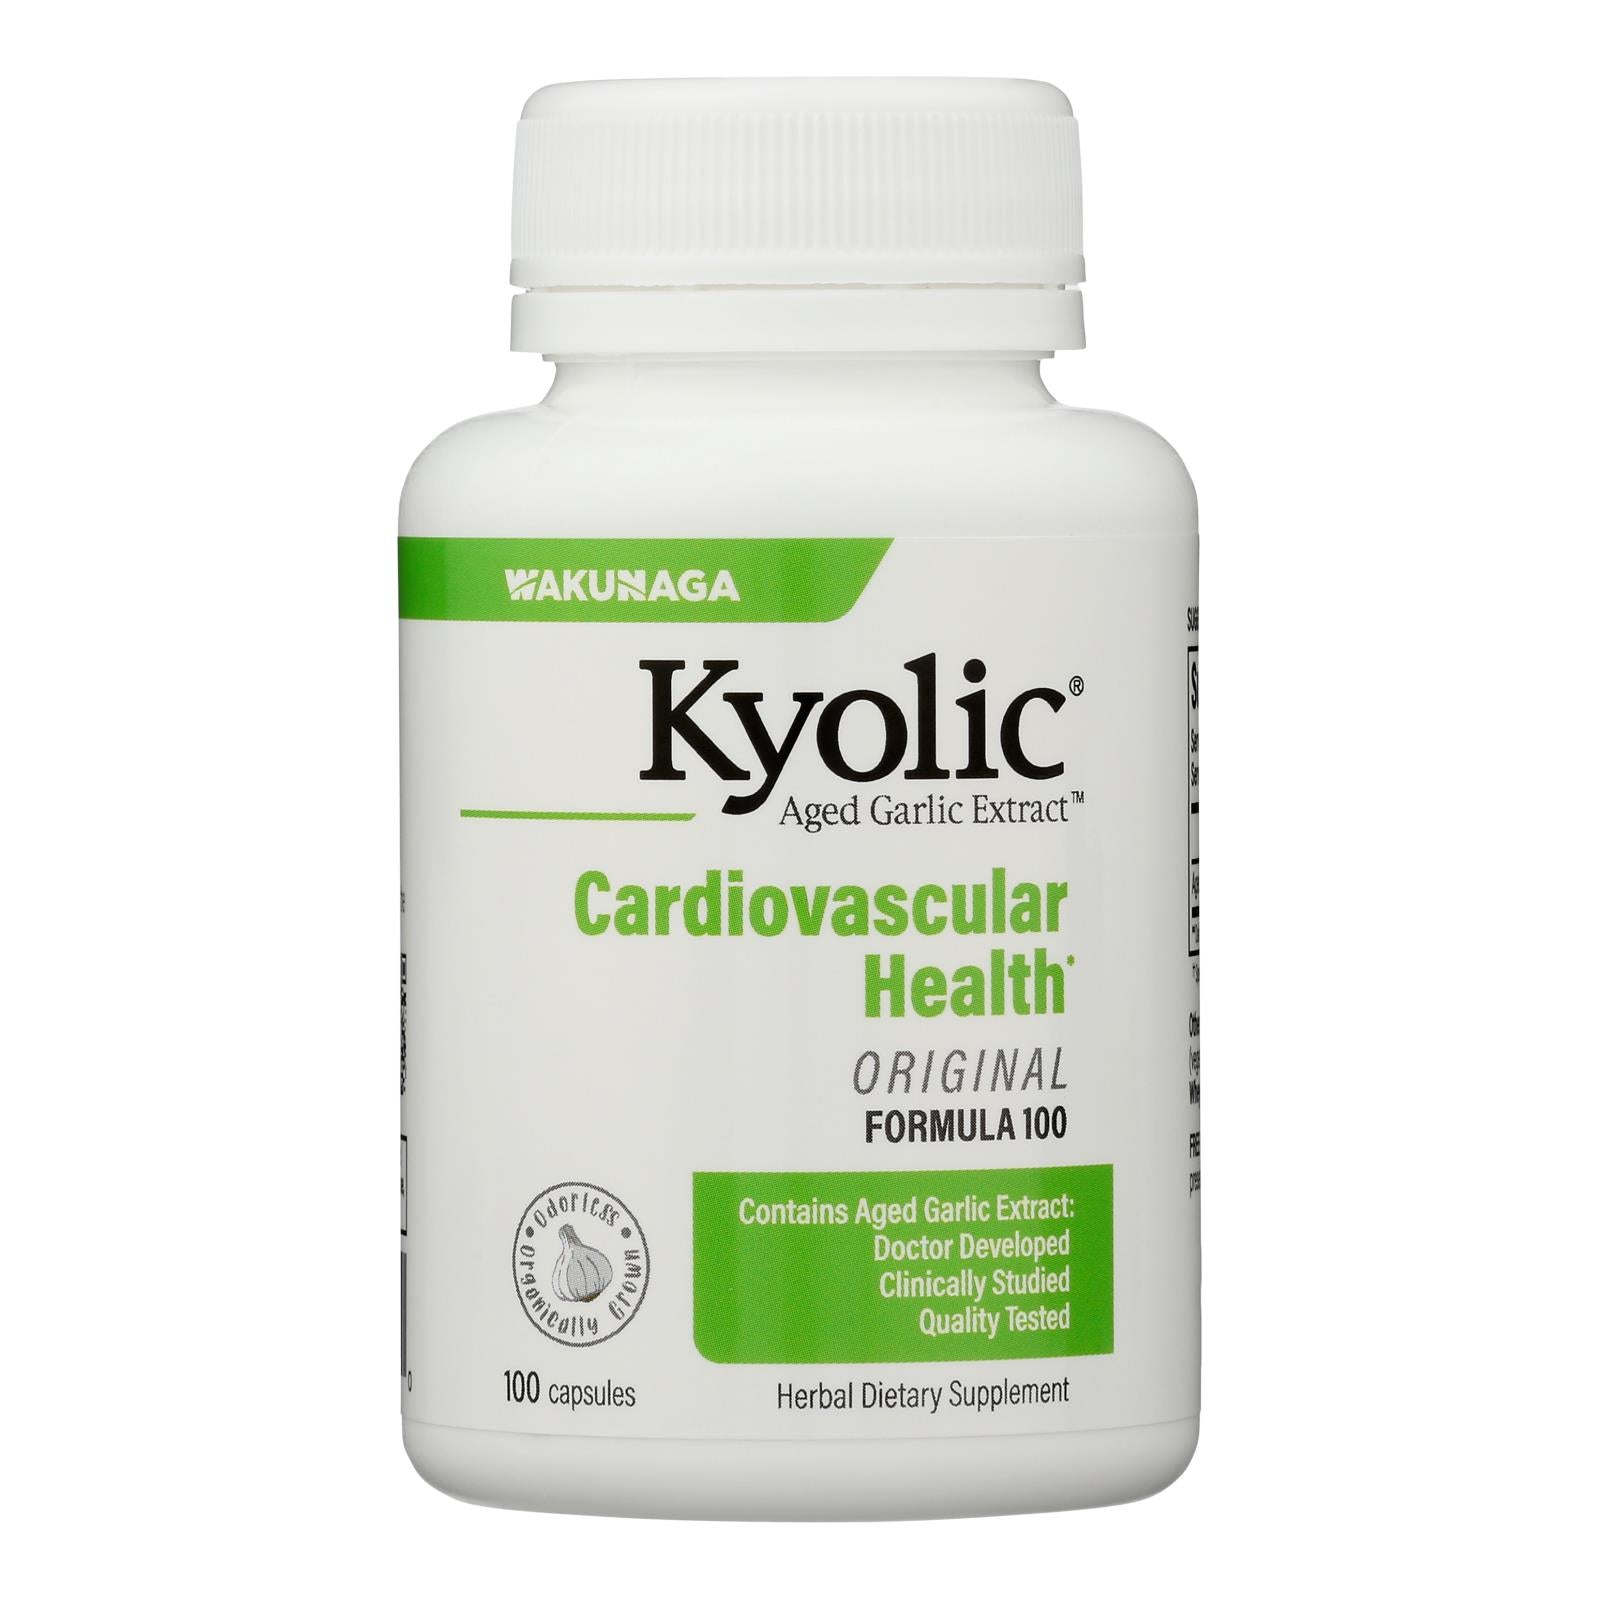 Kyolic - Aged Garlic Extract Hi-po Cardiovascular Original Formula 100 - 100 Capsules